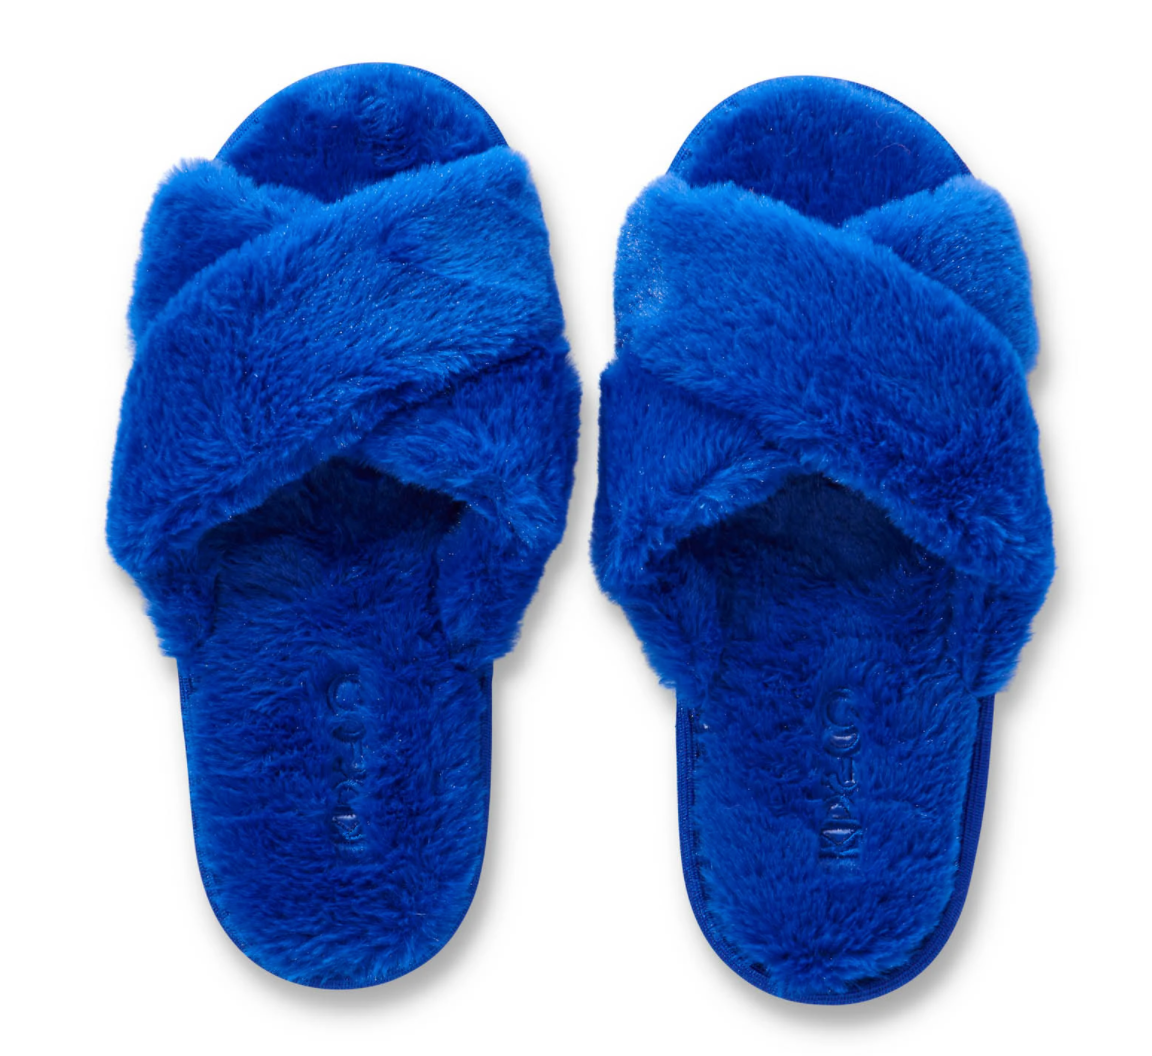 Kip & Co - Dazzling Blue Adult Slippers